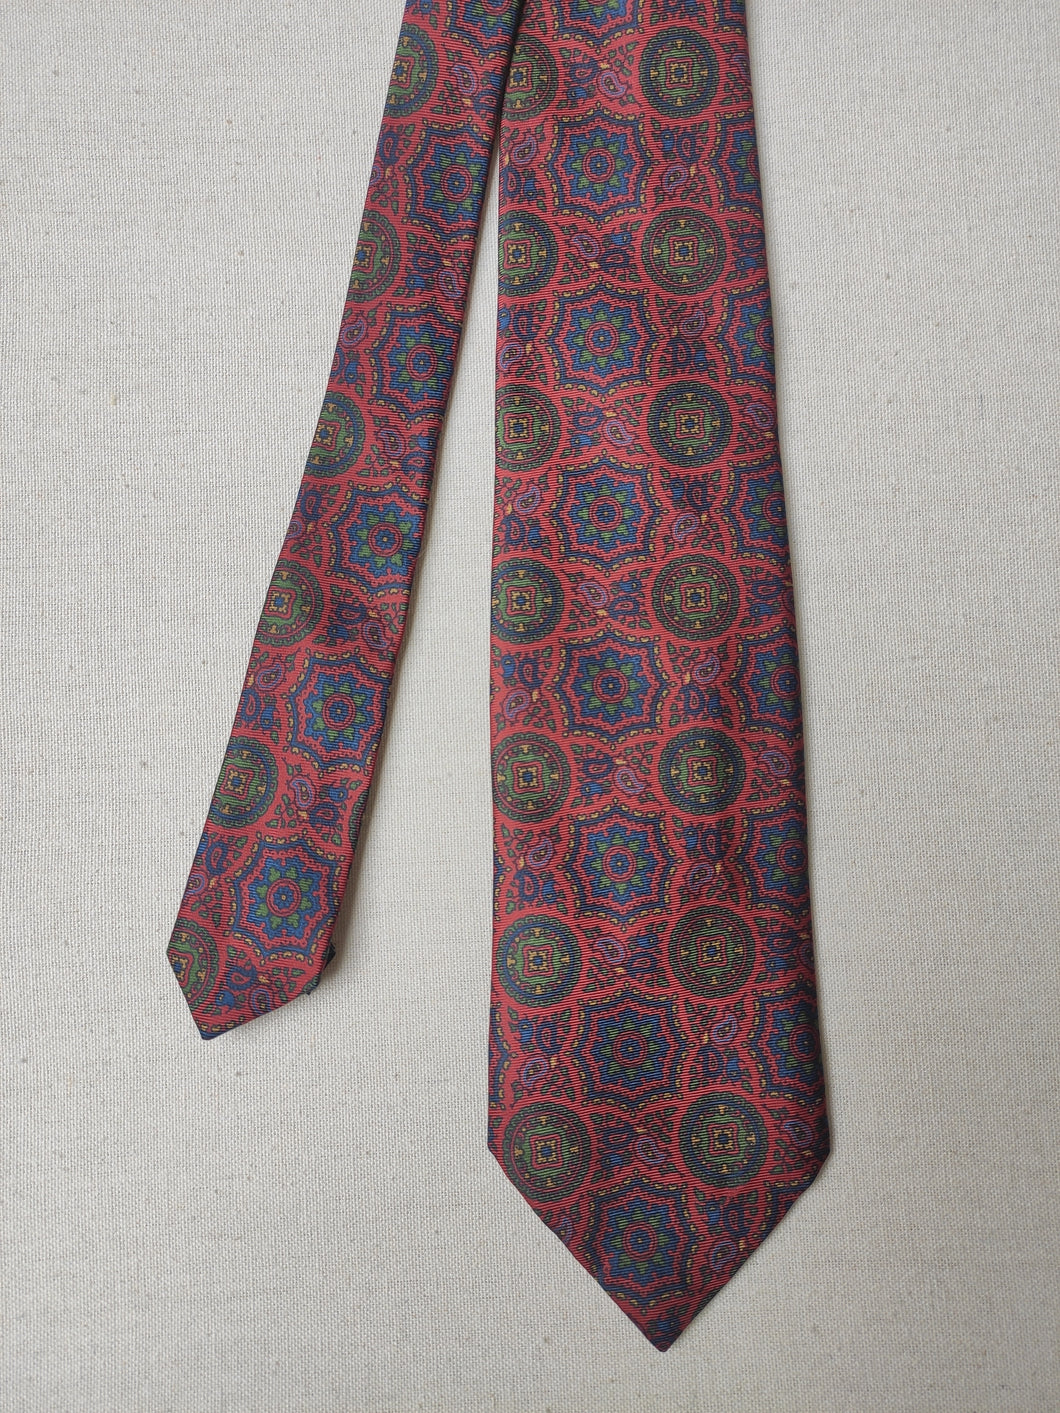 Cravate vintage rouge en soie à motif floral Made in England